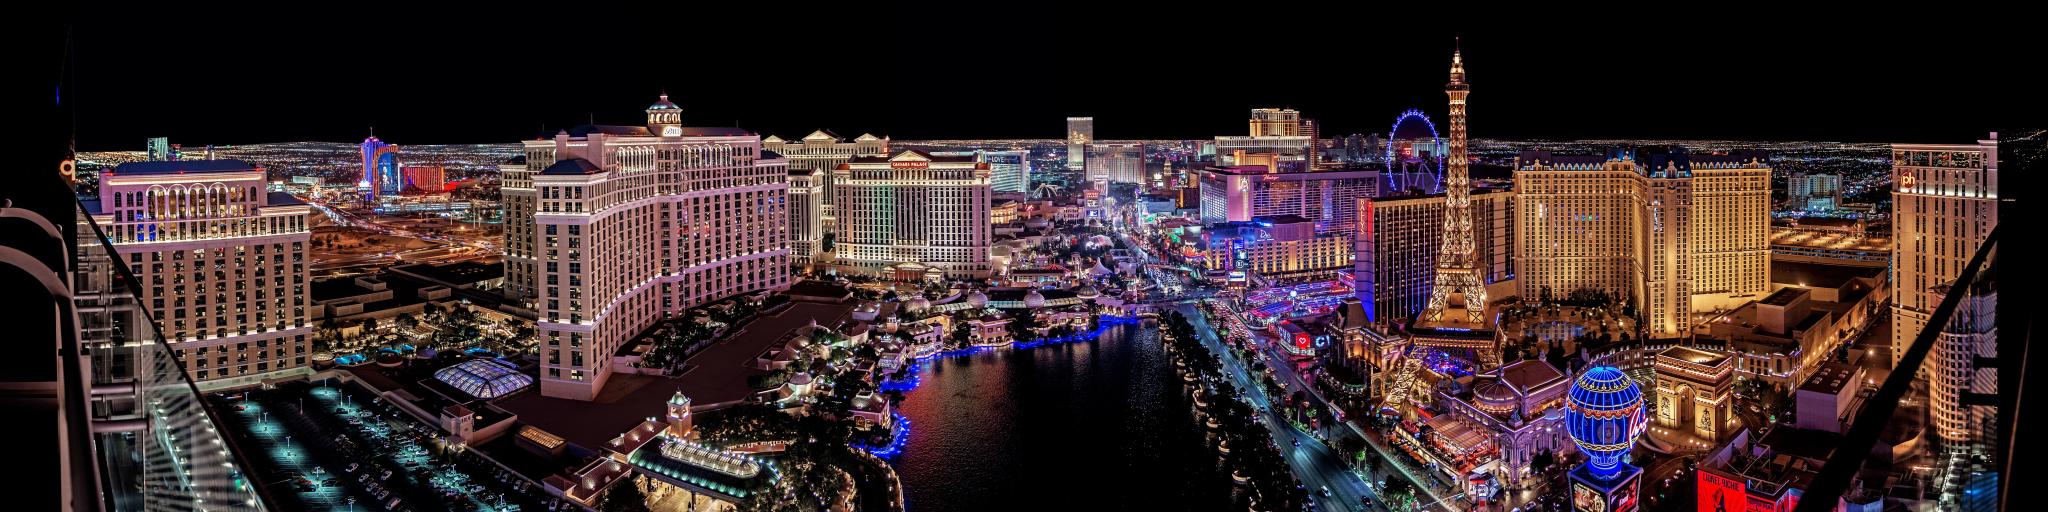 Las Vegas, Nevada, USA with a panoramic view of the Las Vegas Strip taken at night.